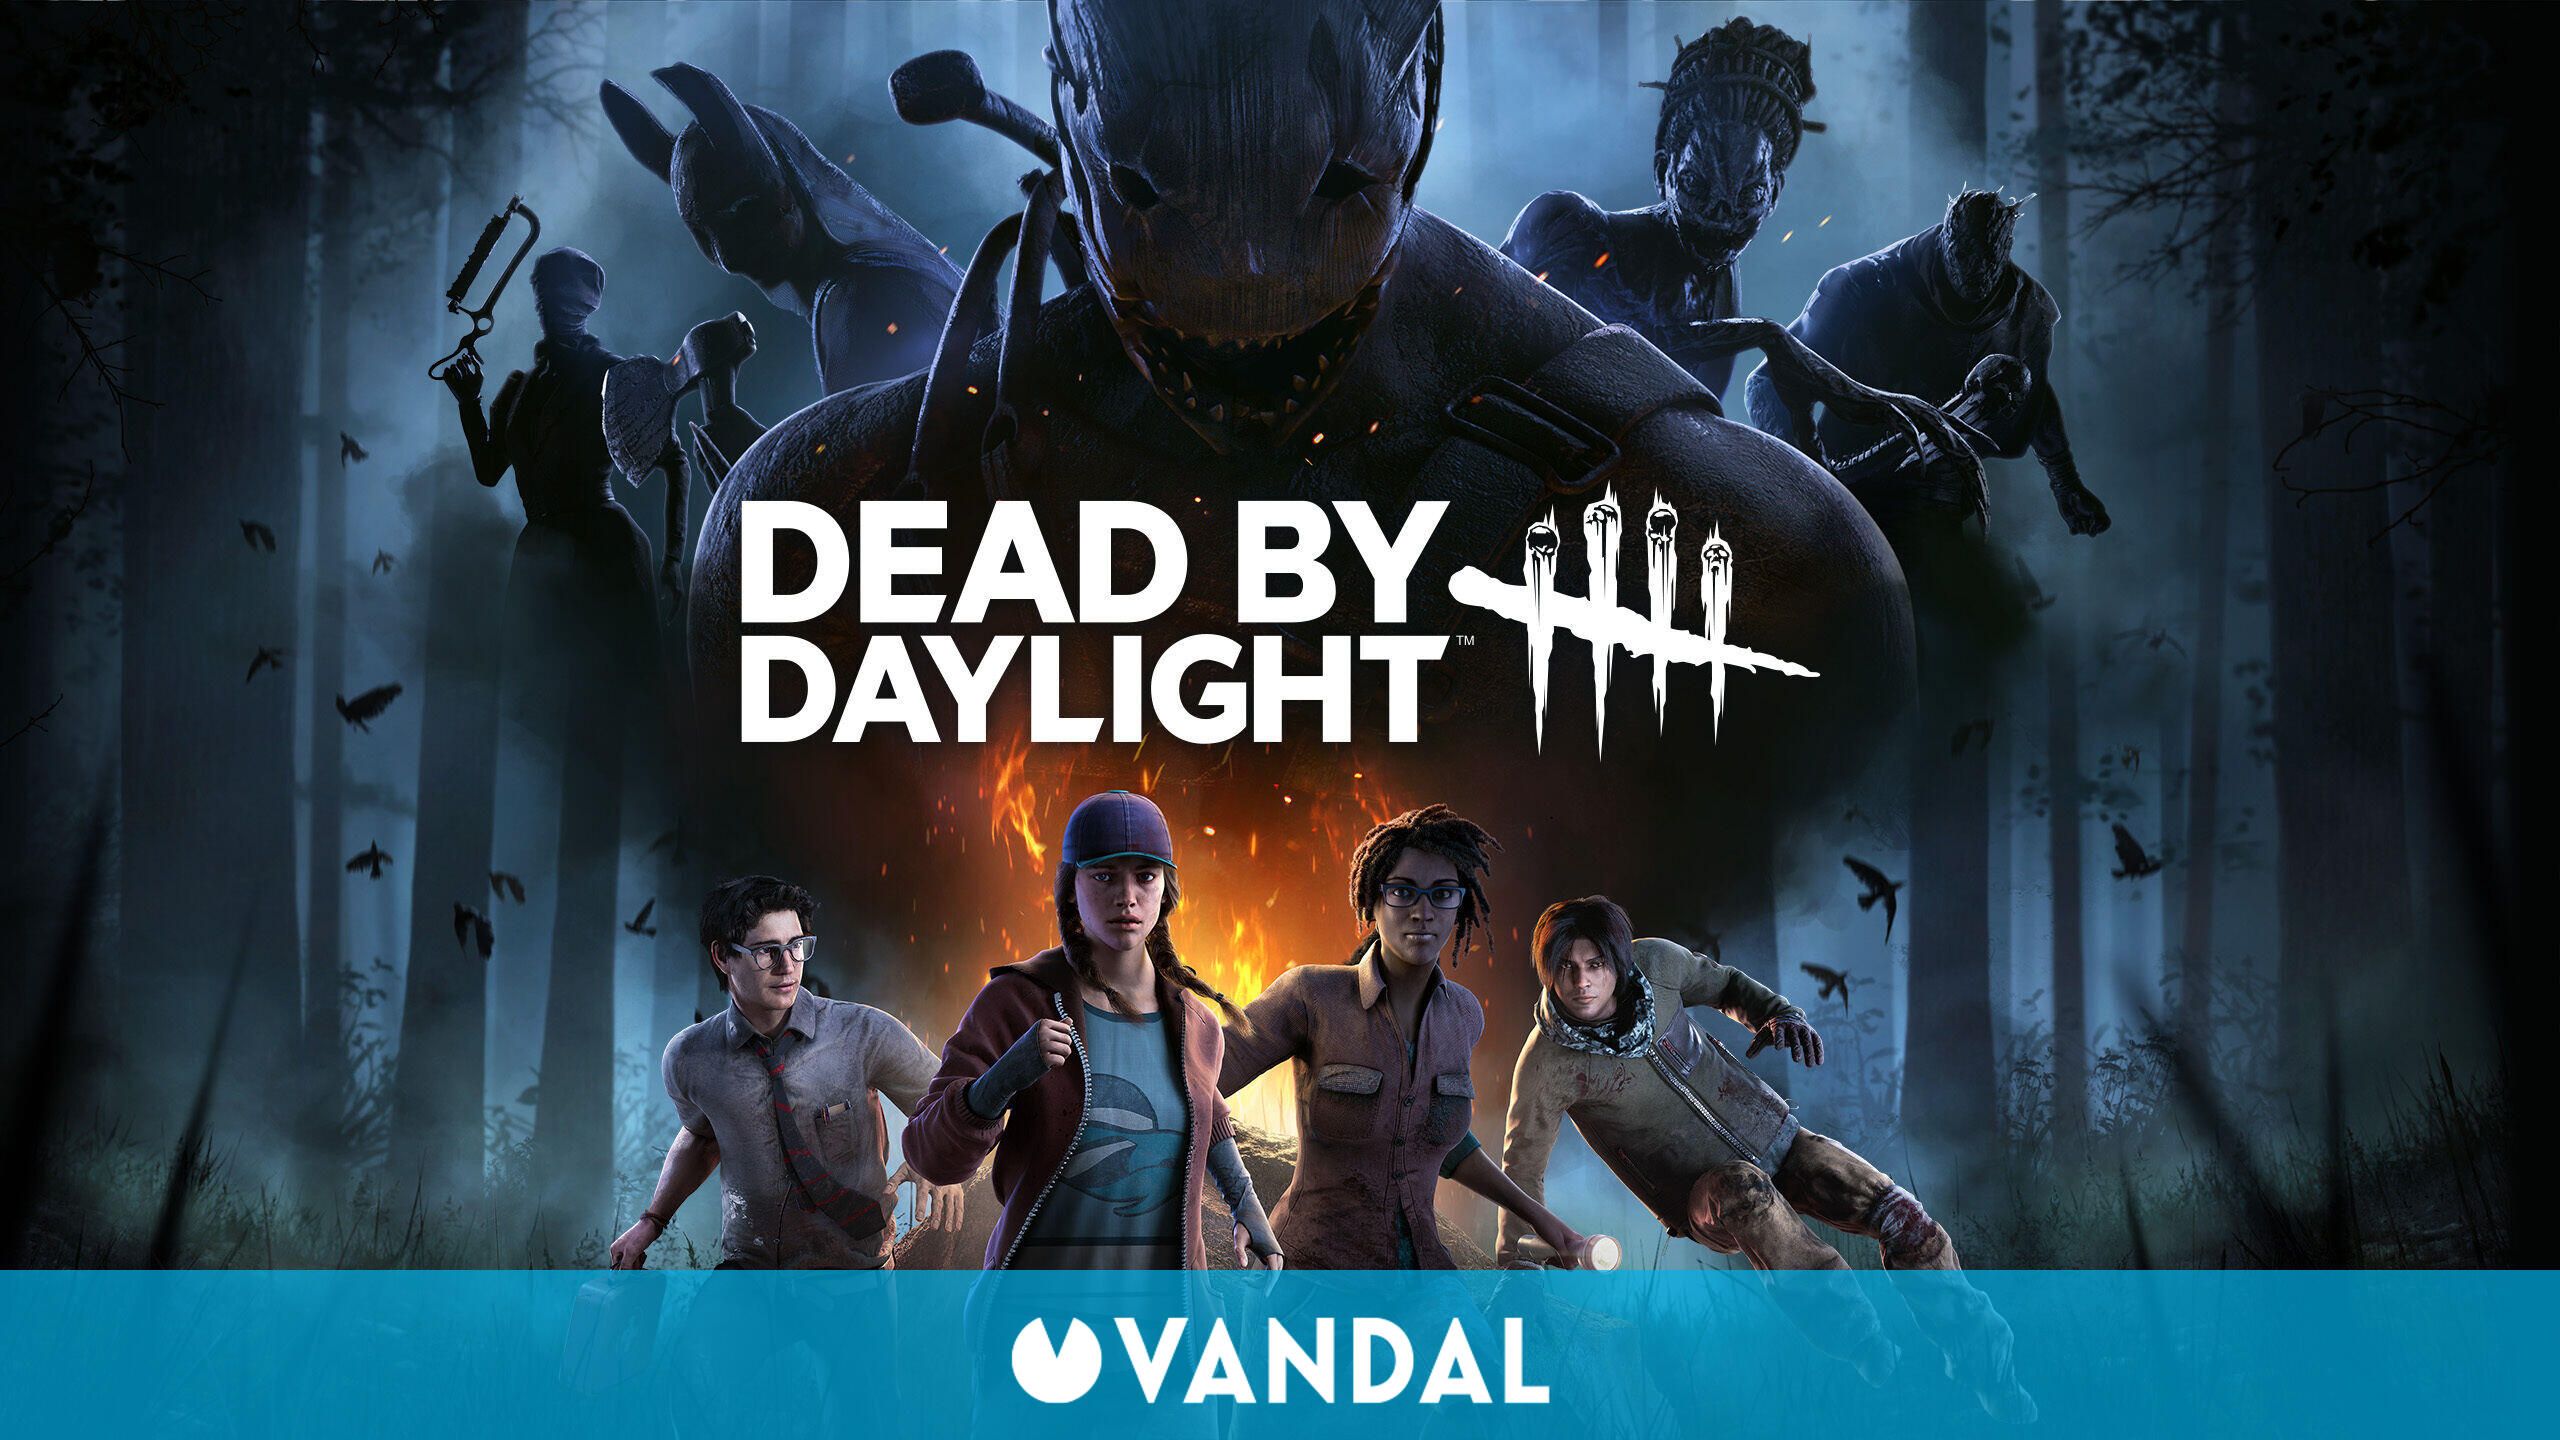 L’horror multiplayer asimmetrico Dead by Daylight sarà adattato al cinema